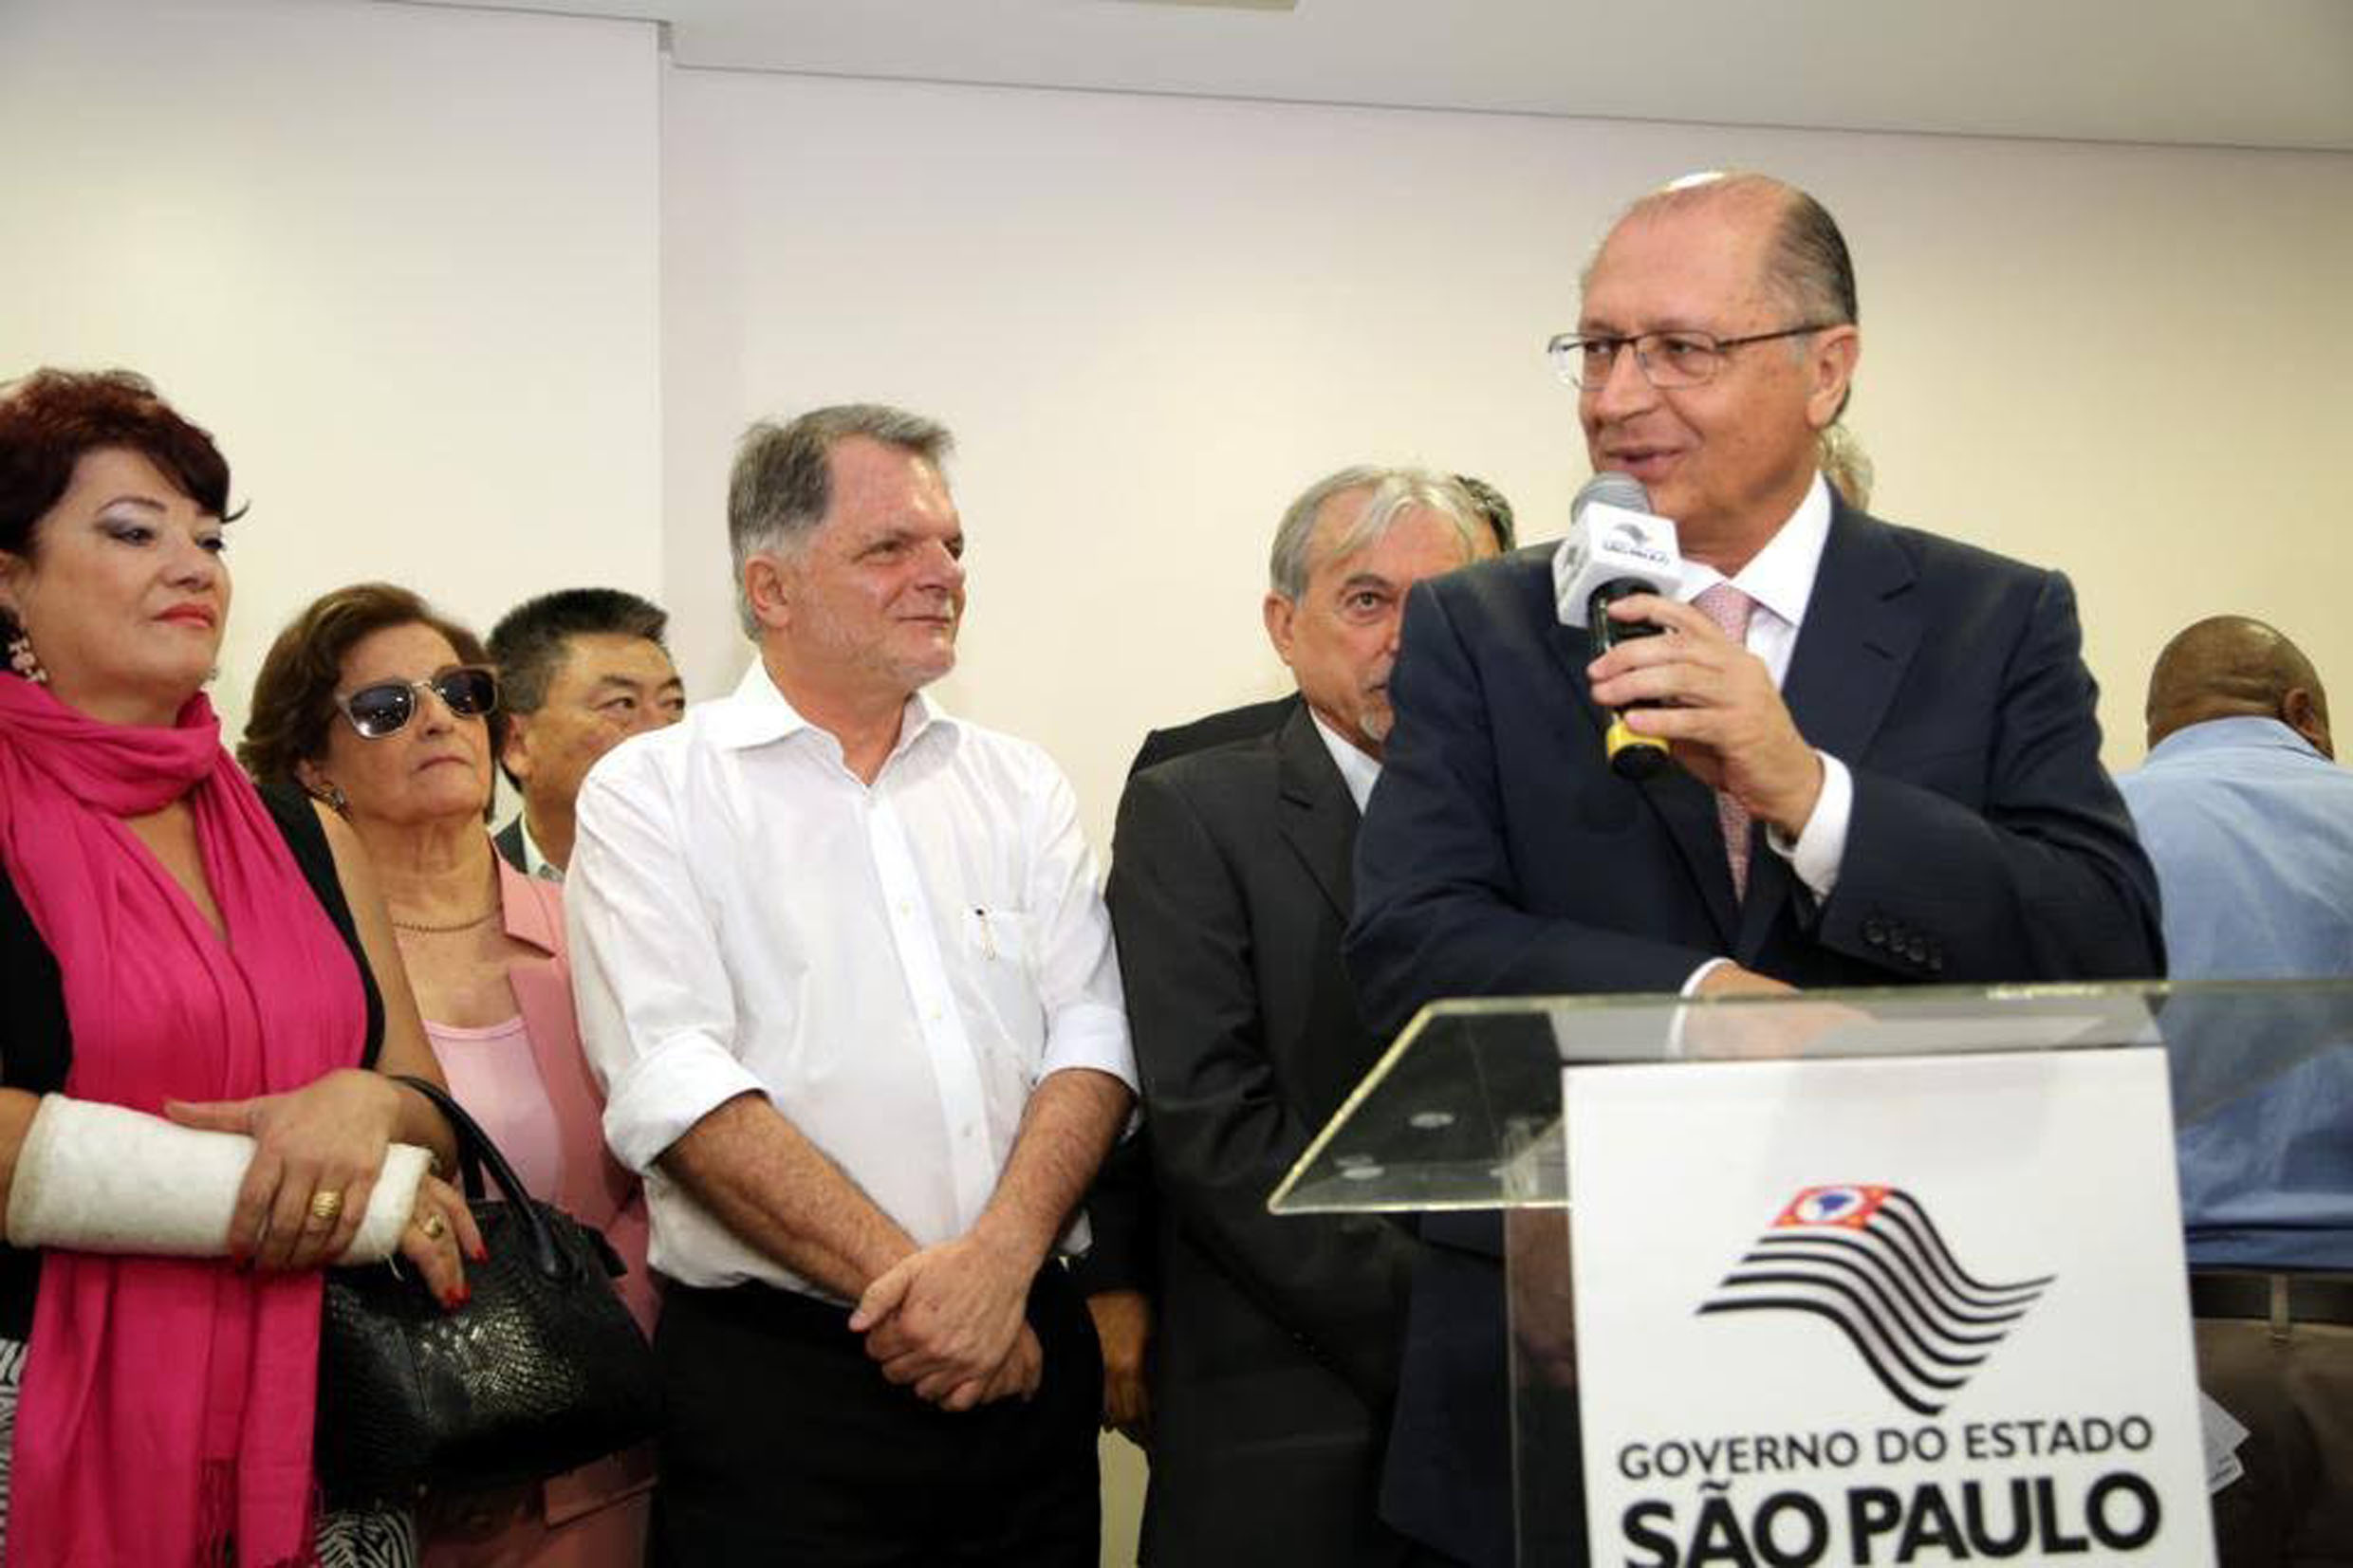 Bragato acompanha Alckmin na inaugurao da nova ala<a style='float:right;color:#ccc' href='https://www3.al.sp.gov.br/repositorio/noticia/N-10-2015/fg176775.jpg' target=_blank><i class='bi bi-zoom-in'></i> Clique para ver a imagem </a>